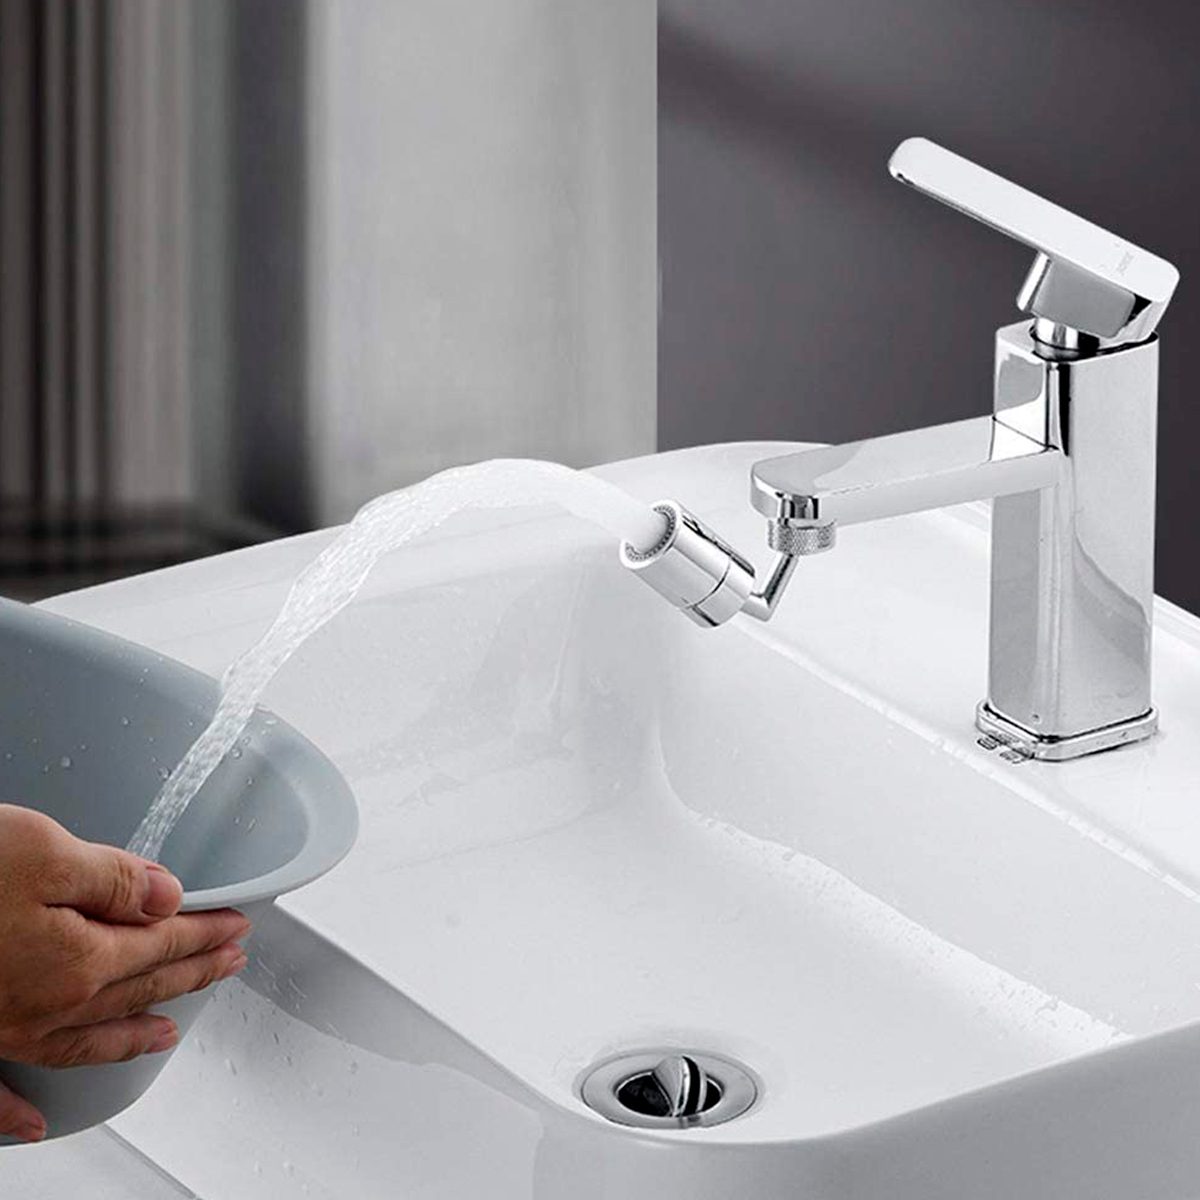 Huazhi 720 Degree Swivel Sink Faucet Aerator Ecomm Amazon.com